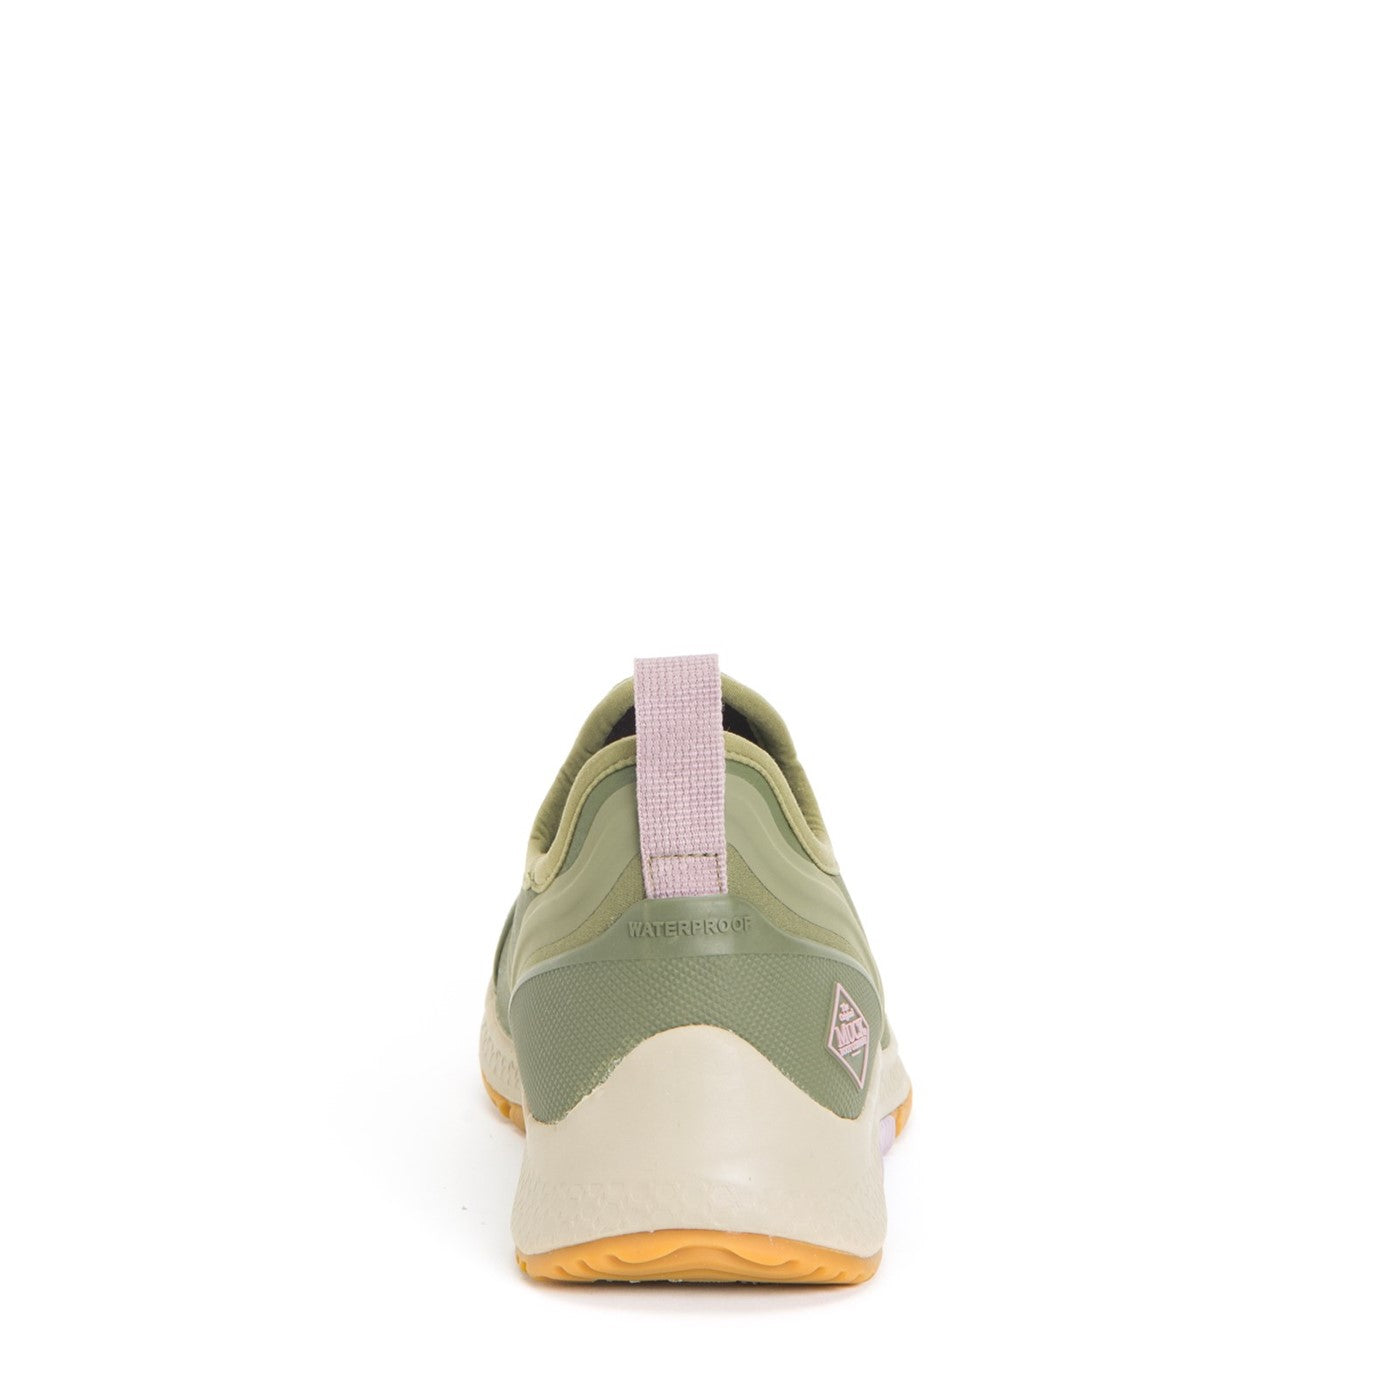 Damen Outscape Schuhe Olivgrün